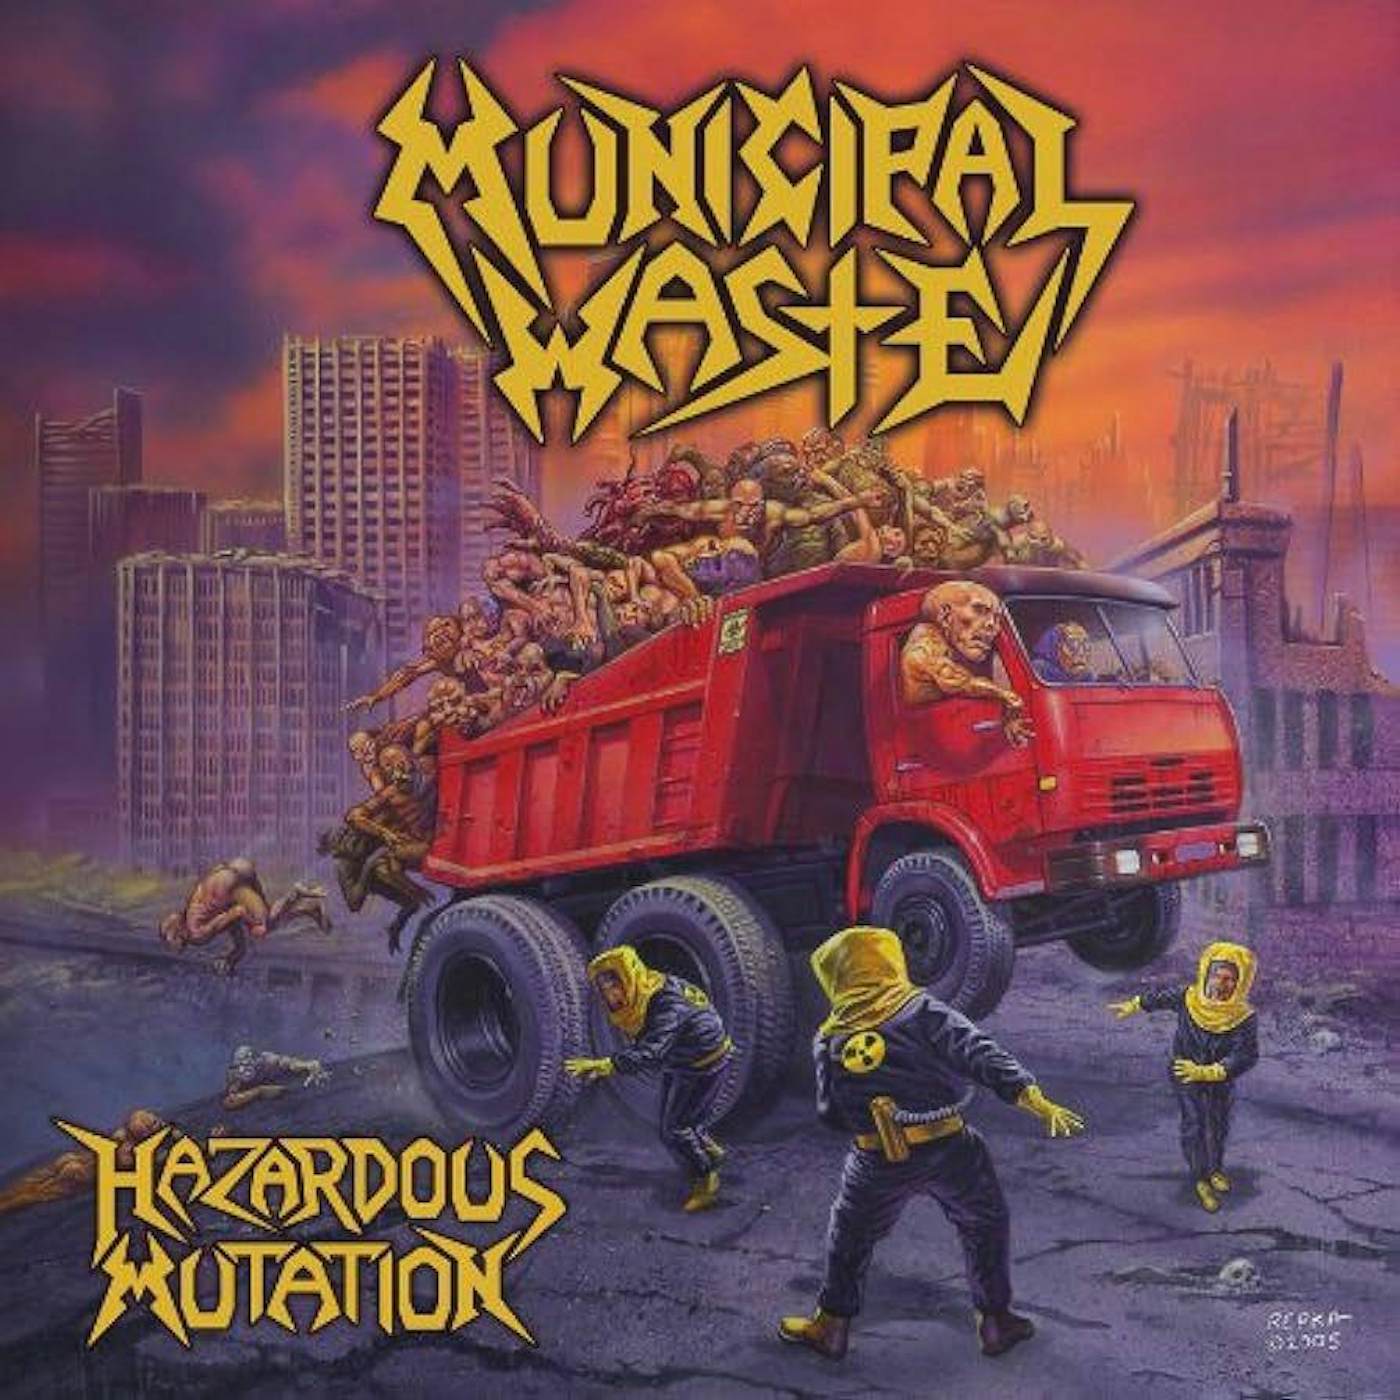 Municipal Waste Hazardous Mutation Vinyl Record